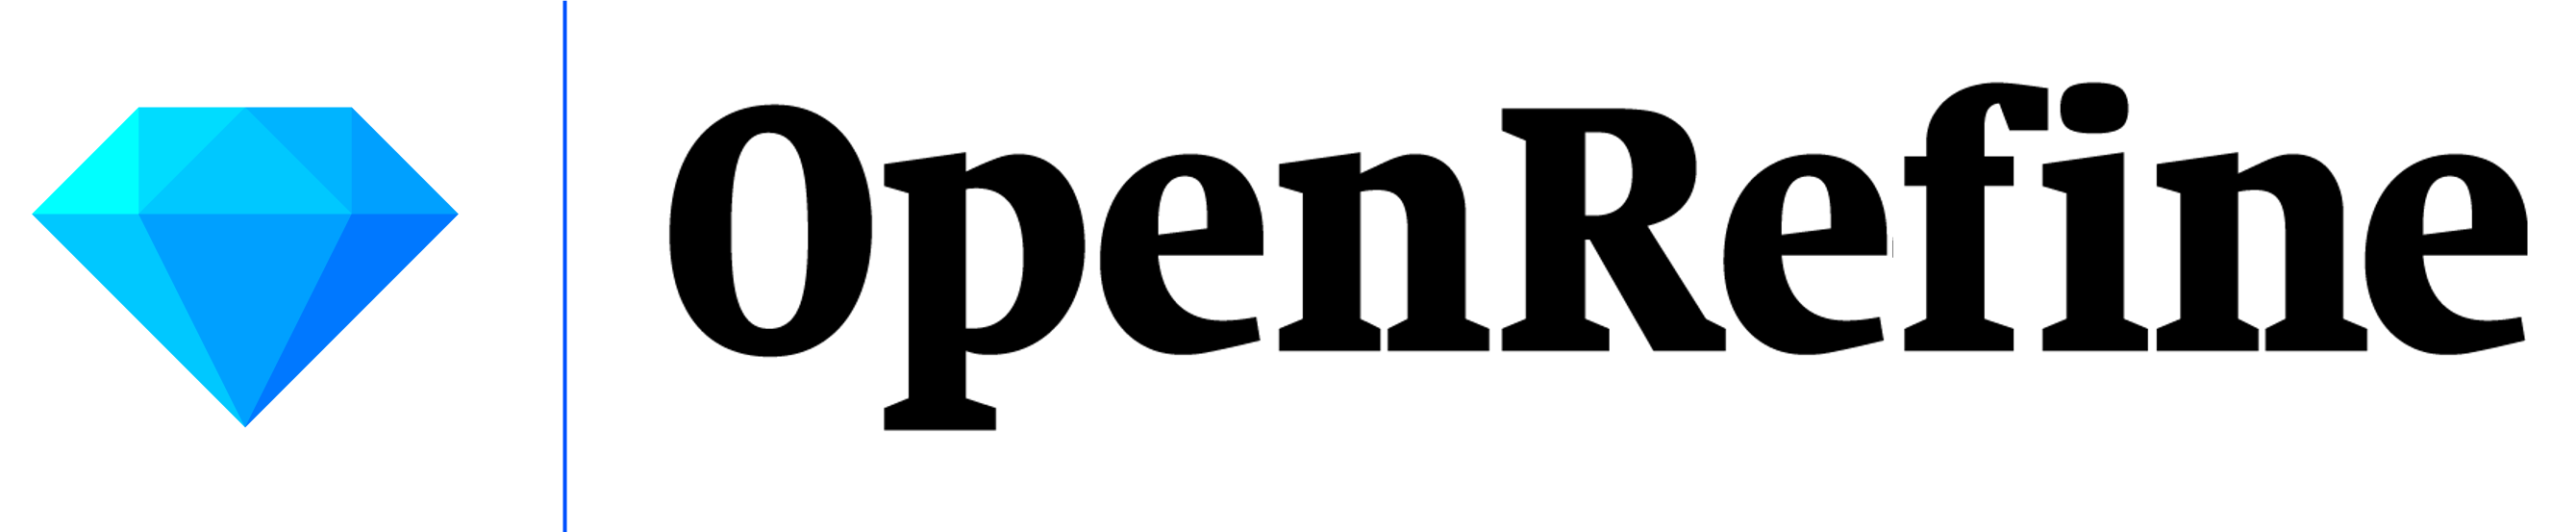 File:OpenRefine logo color.png - Wikimedia Commons